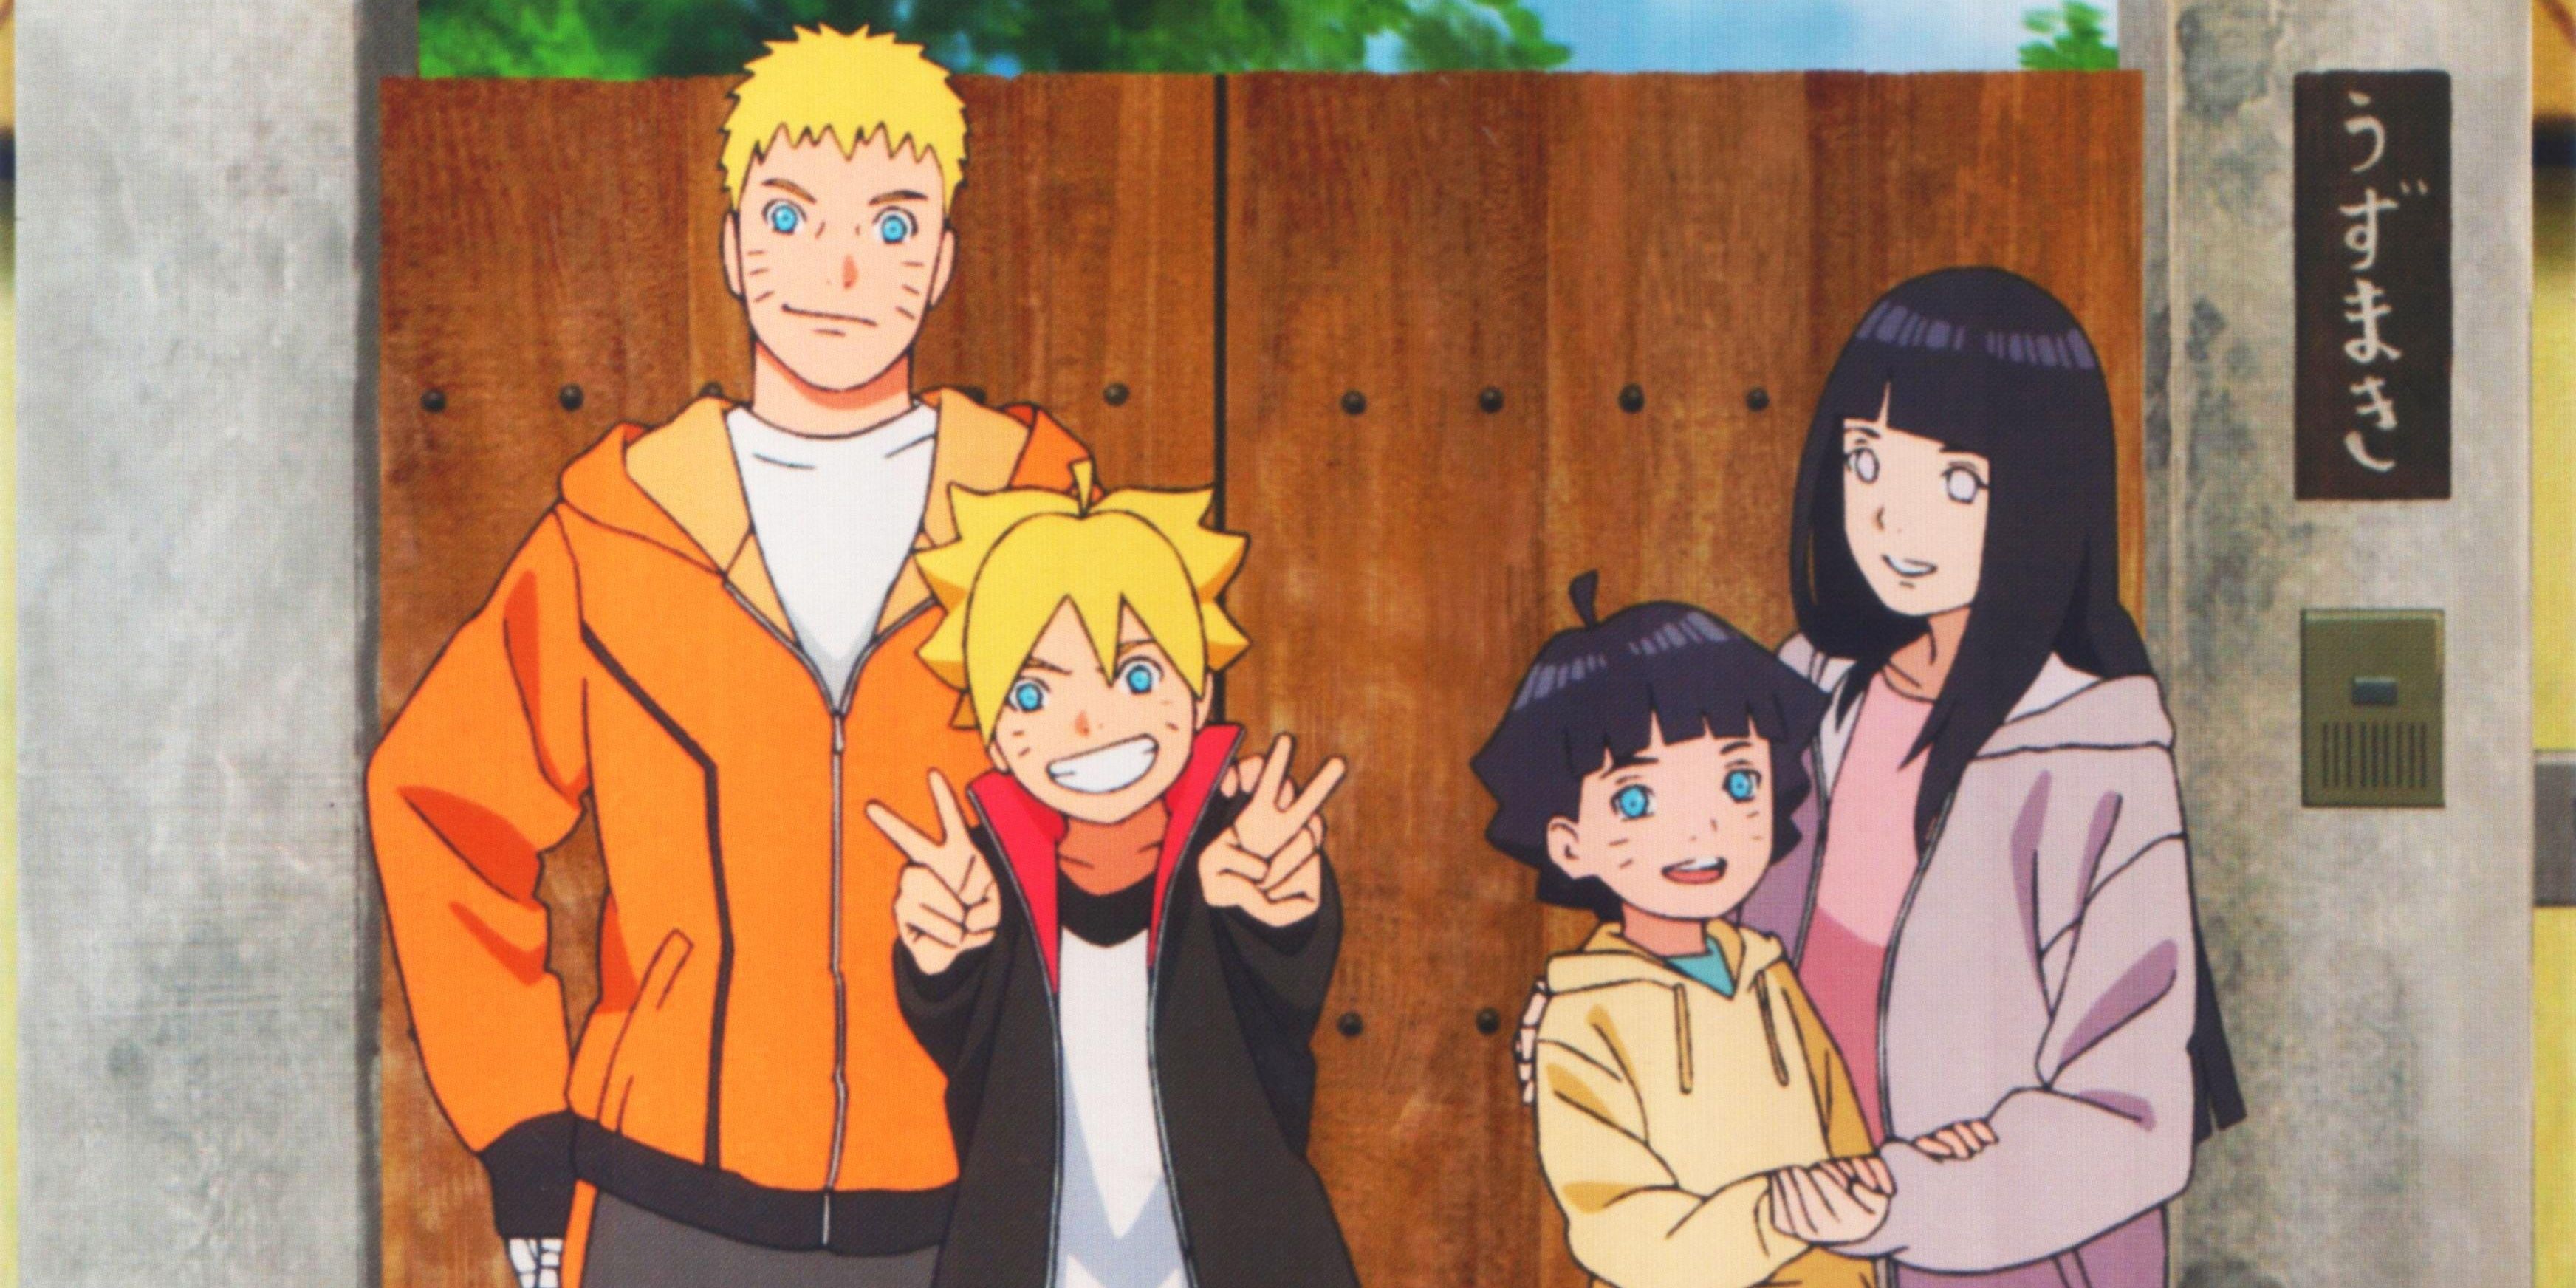 The Uzumaki family, Naruto, Boruto, Himawari, and Hinata in front of a fence